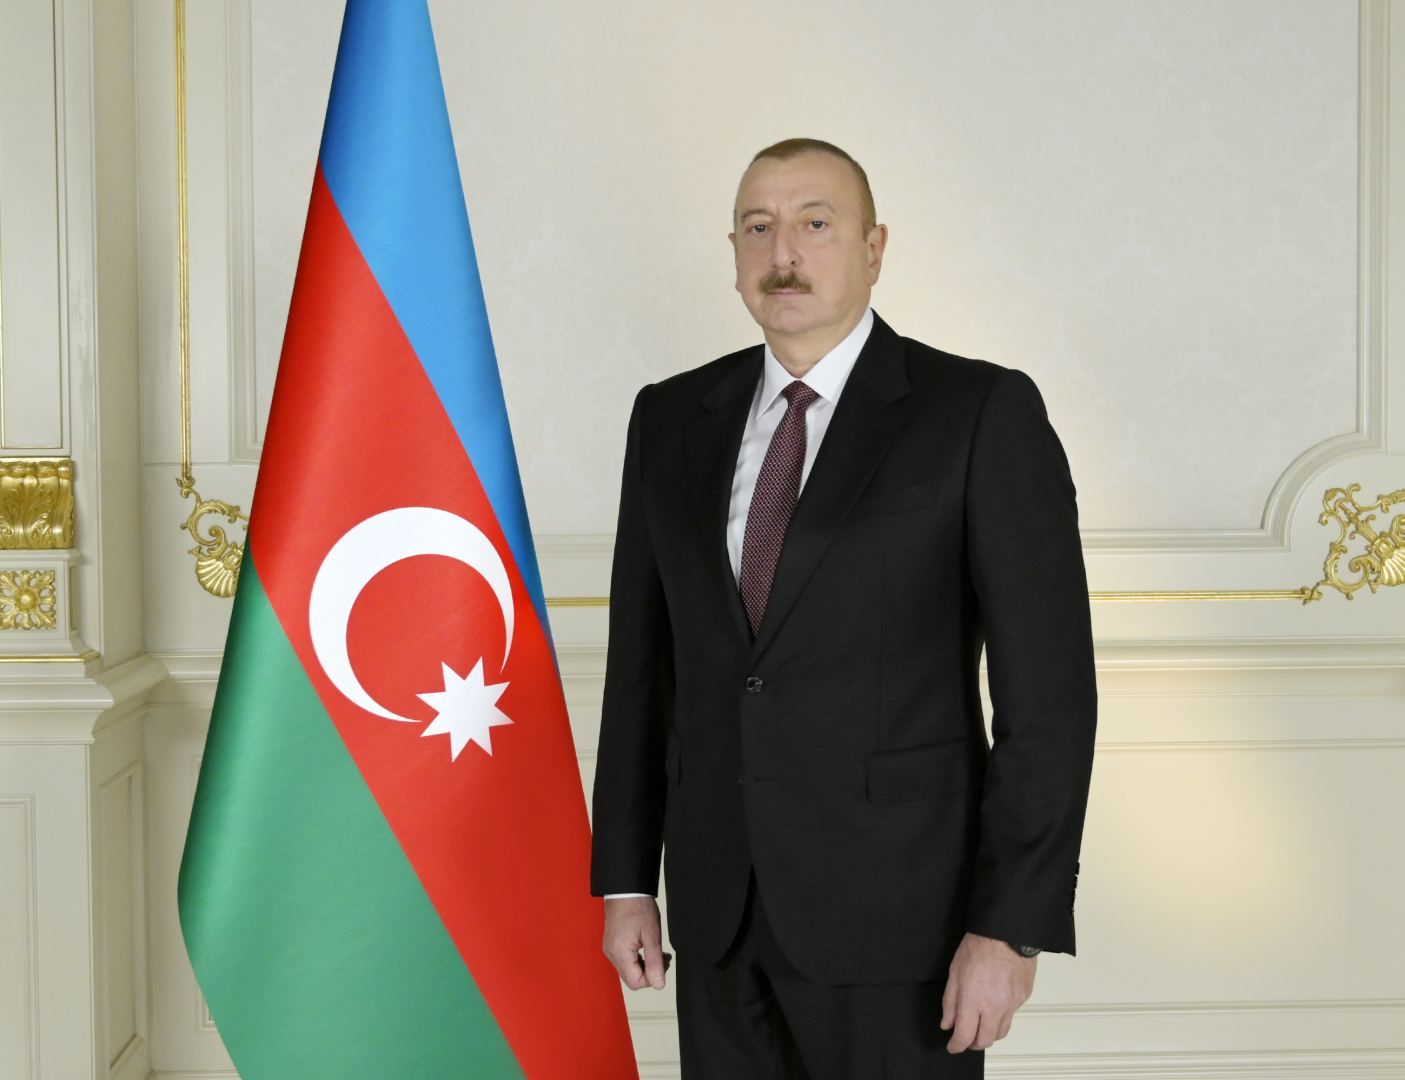 President Ilham Aliyev makes post on 8 March, the International Women’s Day [PHOTO]